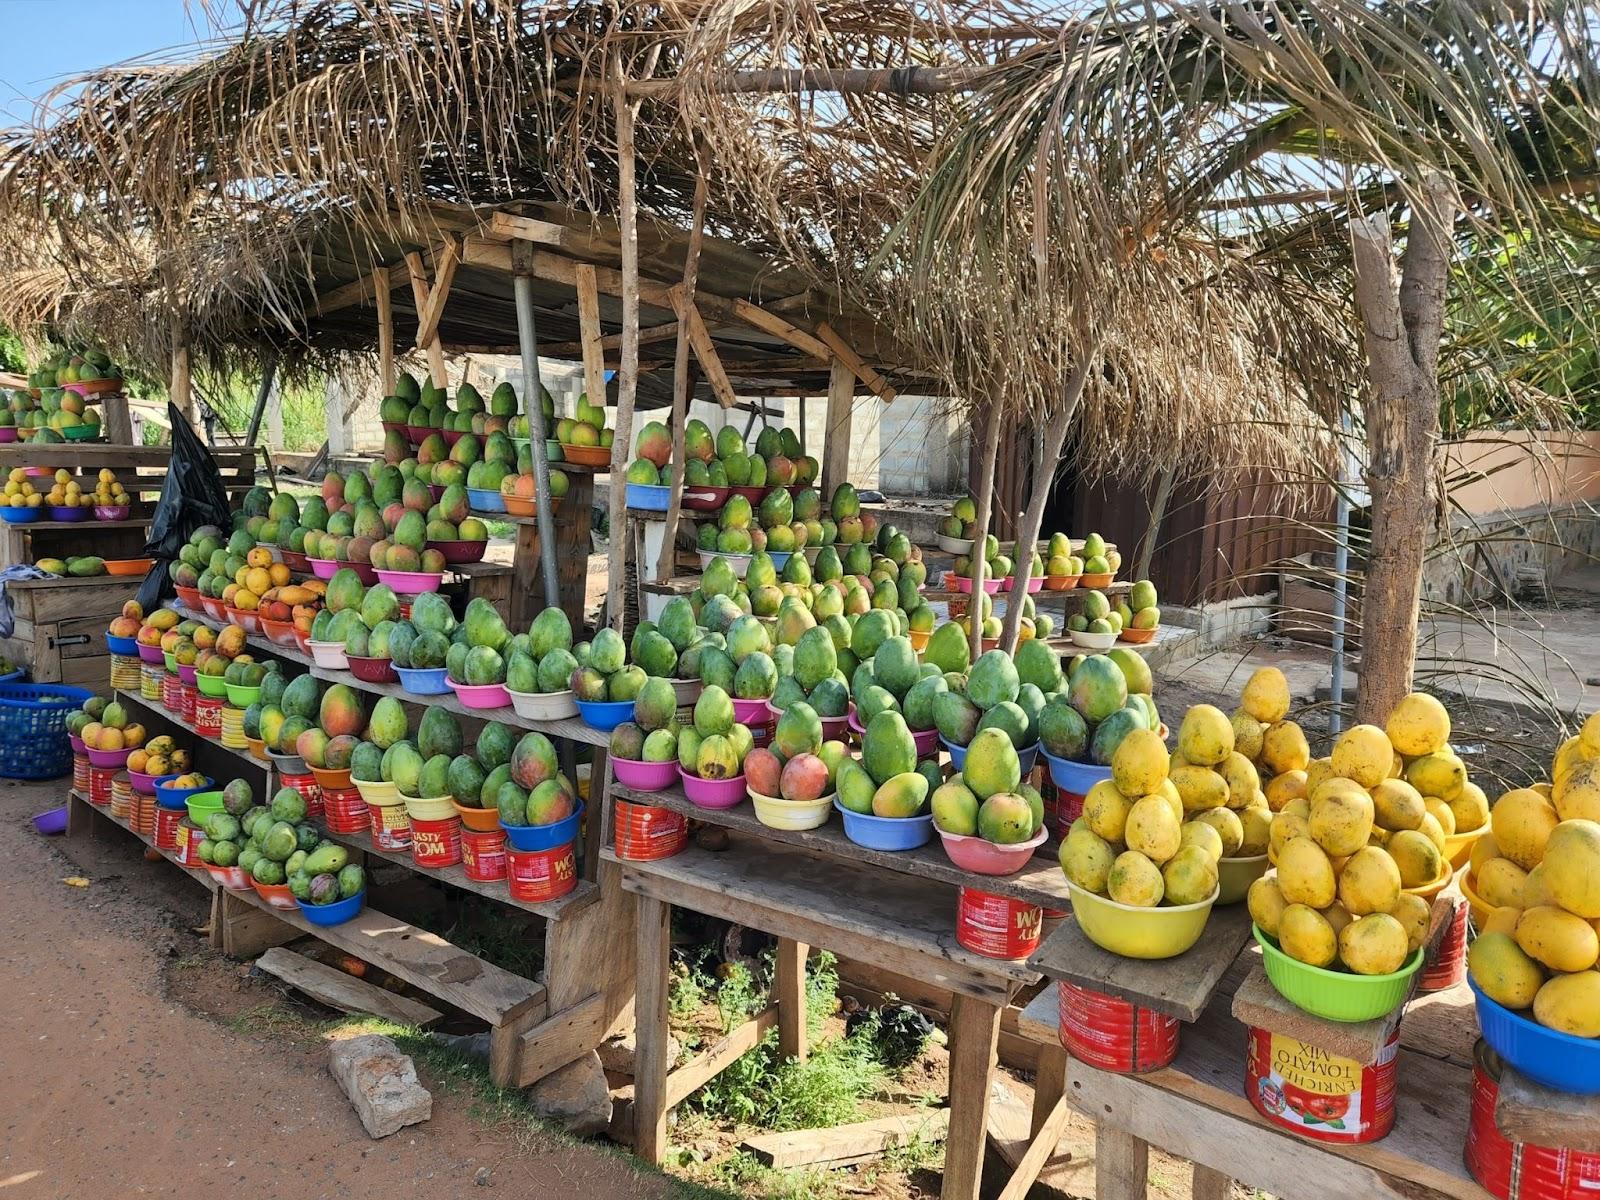 Roadside market in Ghana stalls selling ripe mangoes